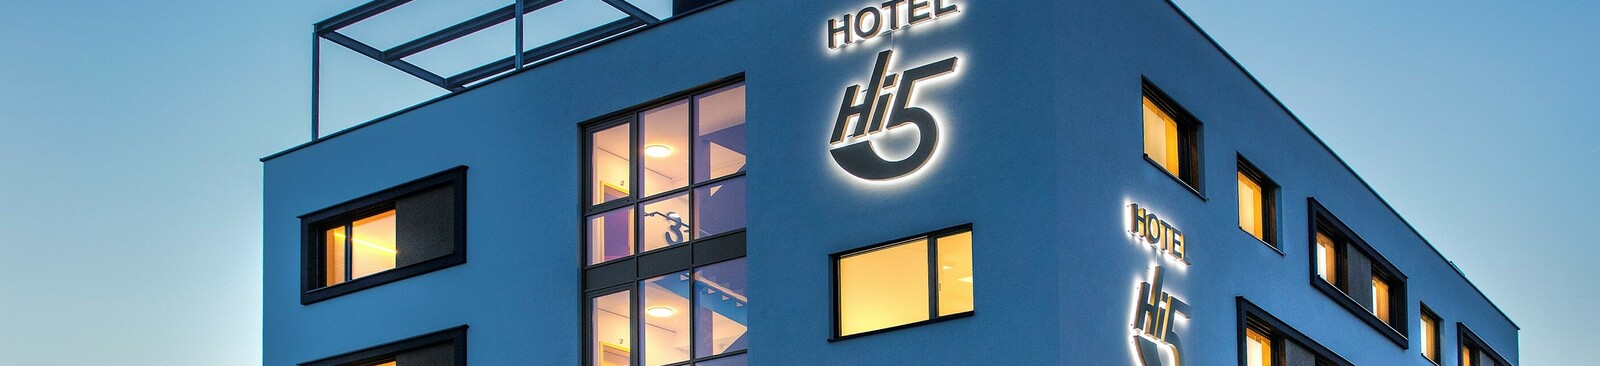 Hi5 Hotel Seiersberg nahe bei Graz in der Steiermark